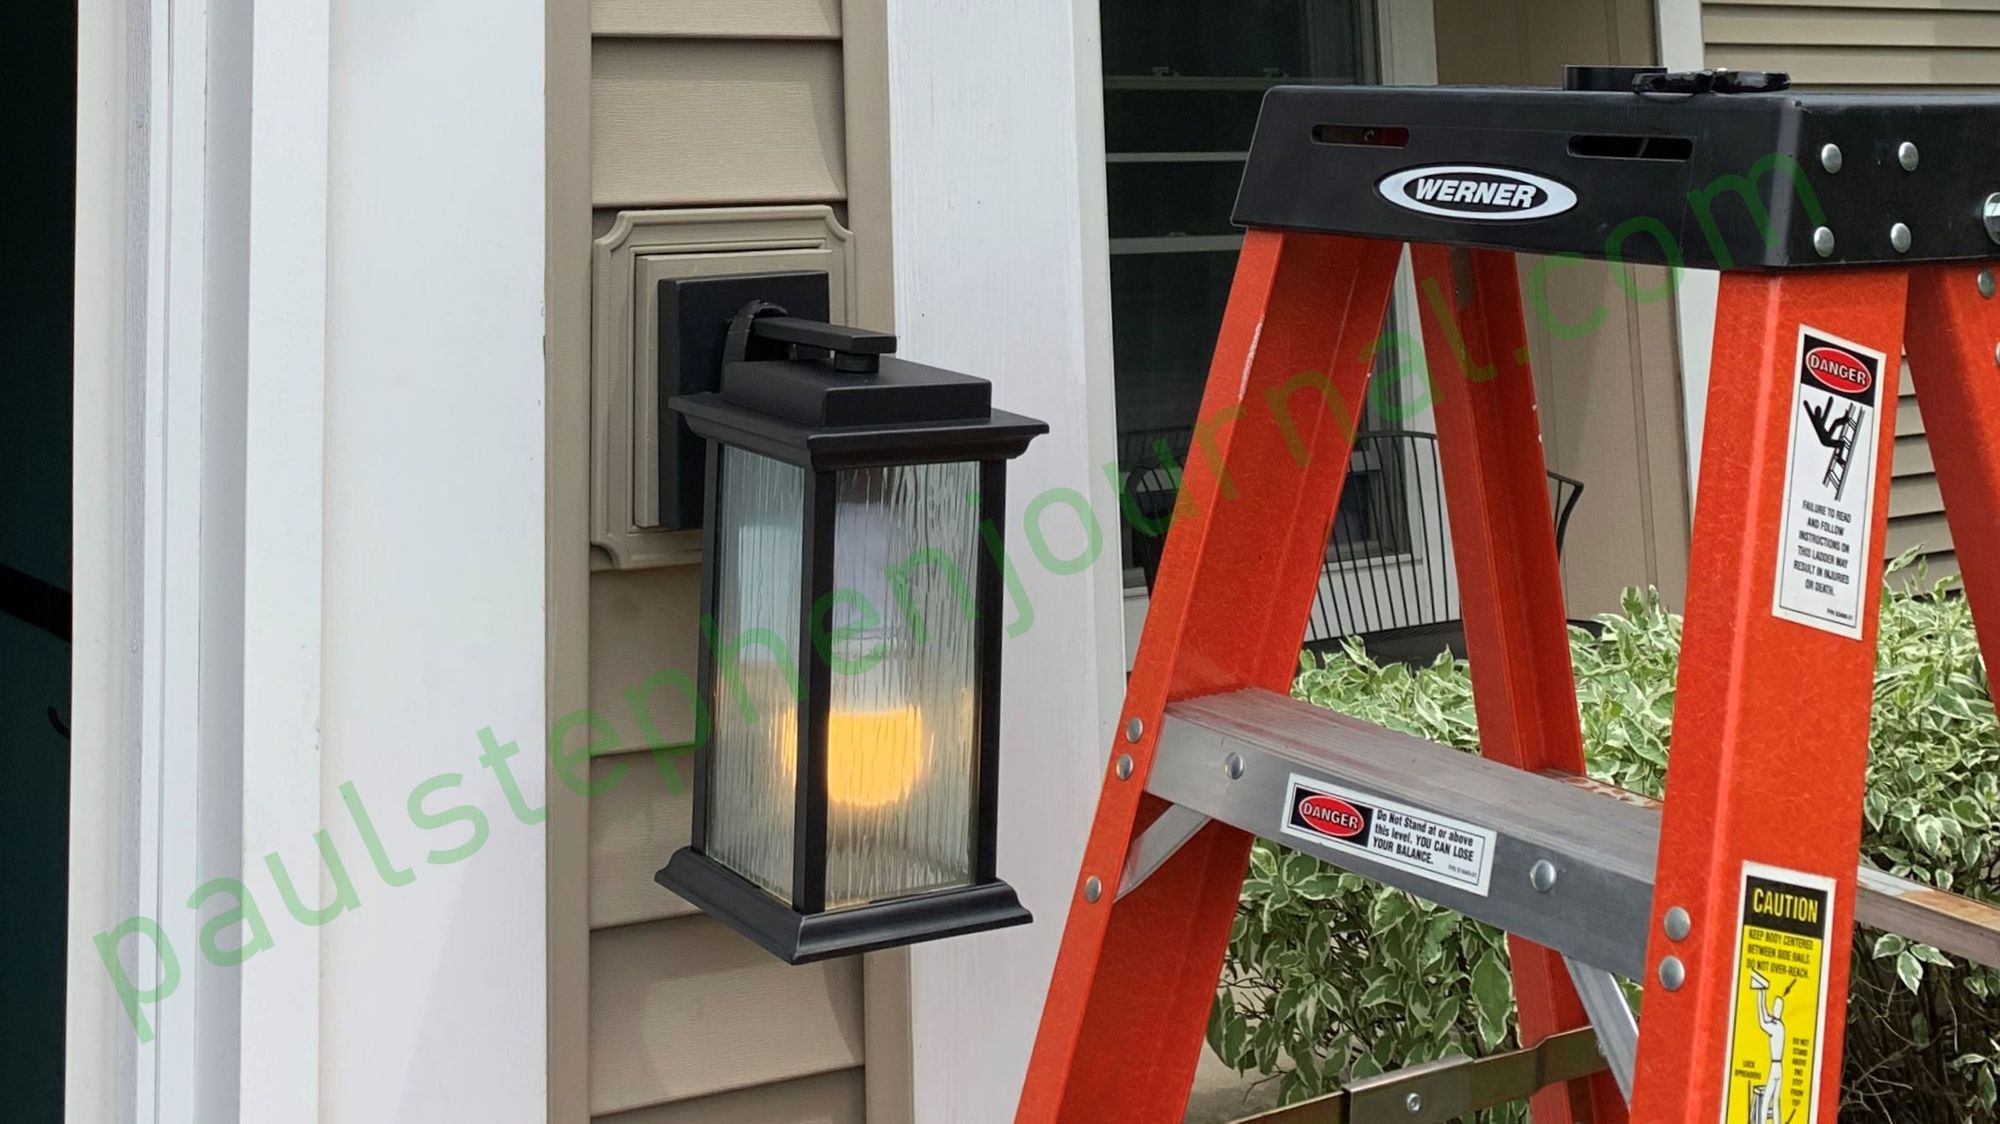 Garage Security Cameras Using Existing Light Fixtures